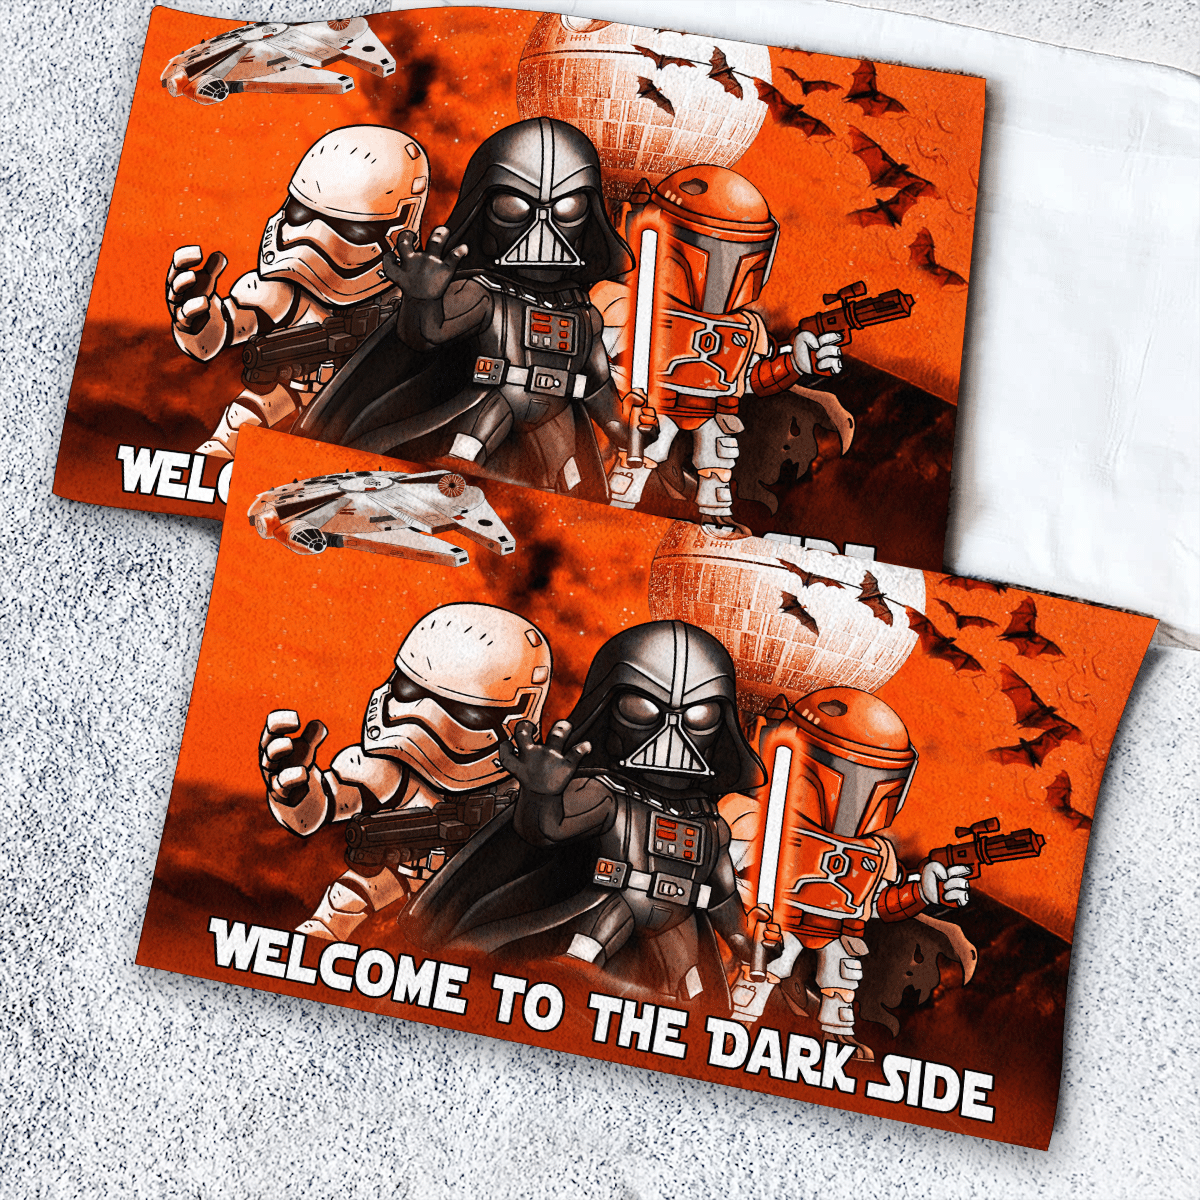 Star Wars Darth Vader Stormtrooper Boba Fett Welcome to the dark side doormat 10